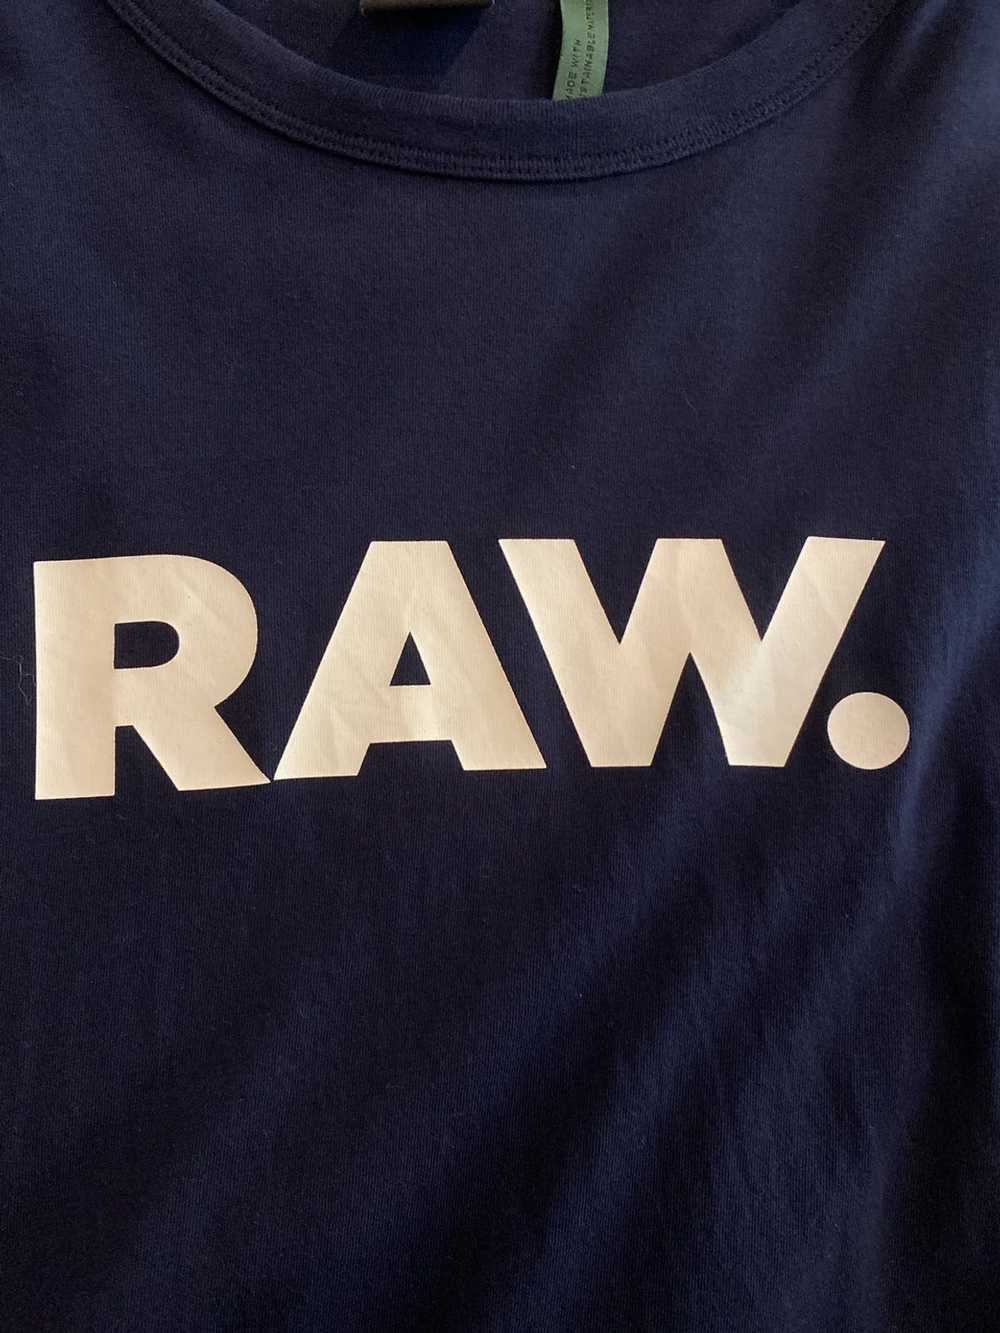 G Star Raw G Star Raw “RAW” Tee - image 2